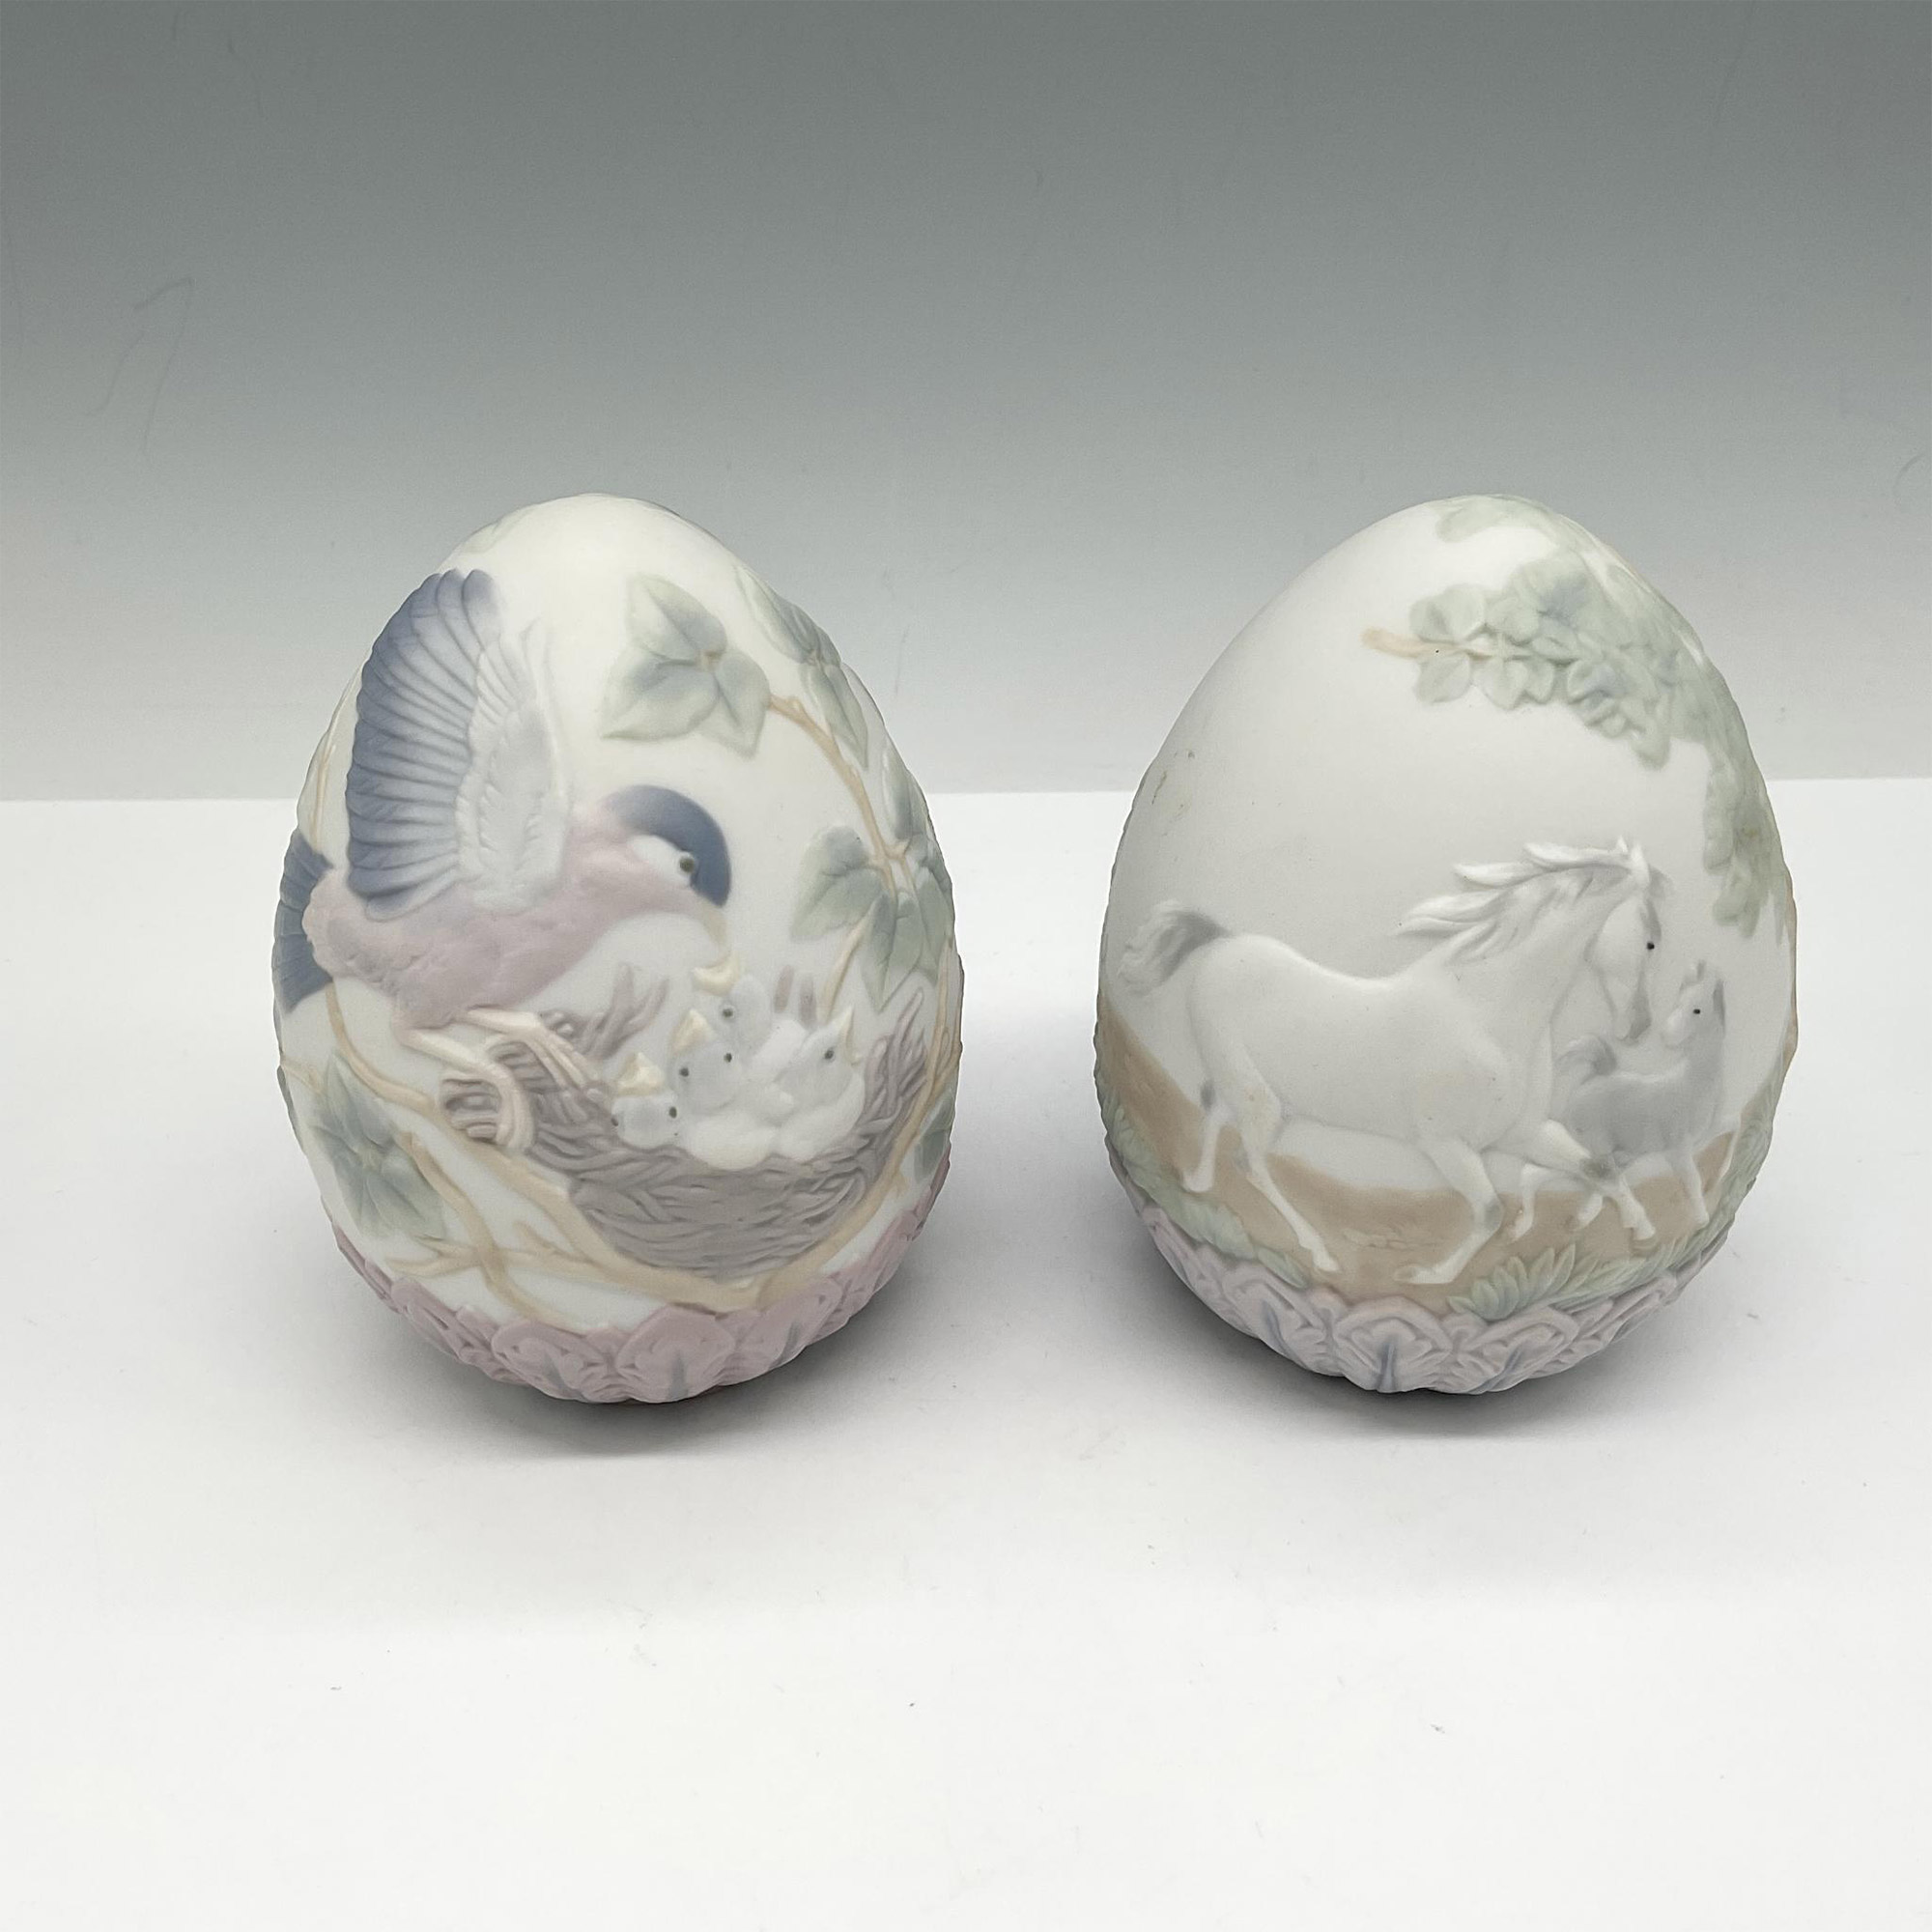 2pc Lladro Porcelain Limited Edition Eggs, 1993 & 1995